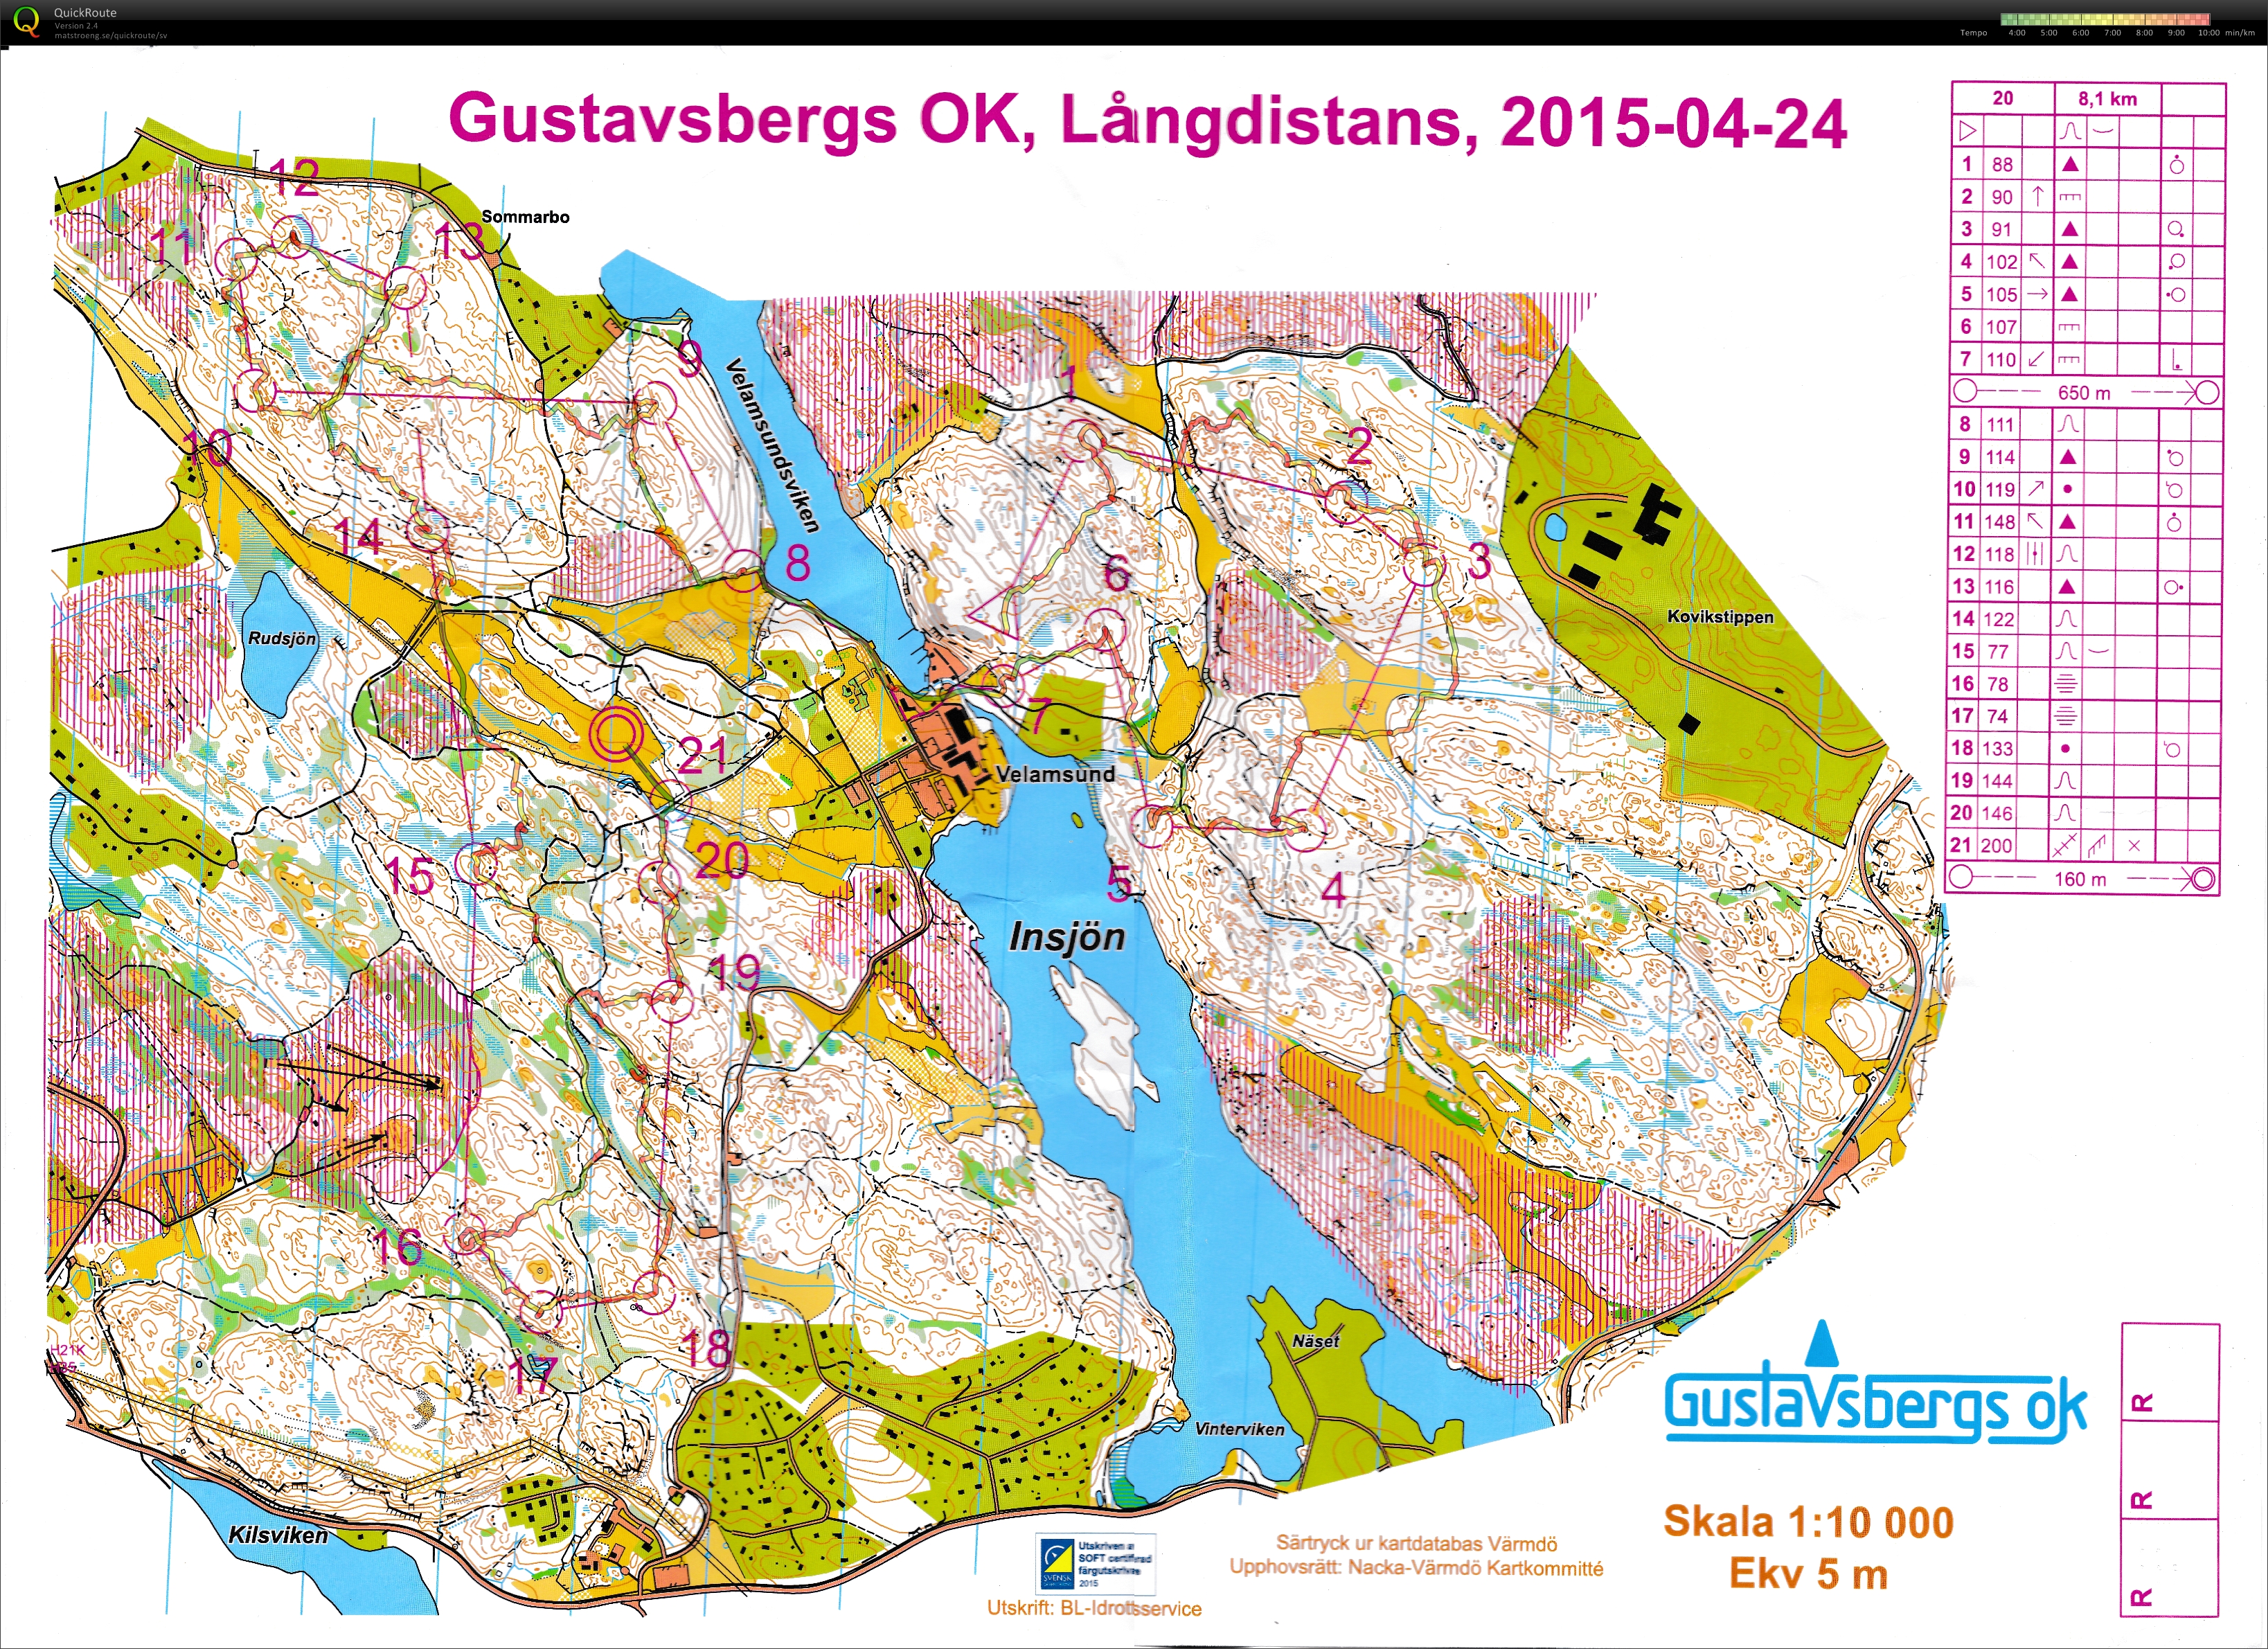 Gustavsbergs OK, Långdistans (25.04.2015)